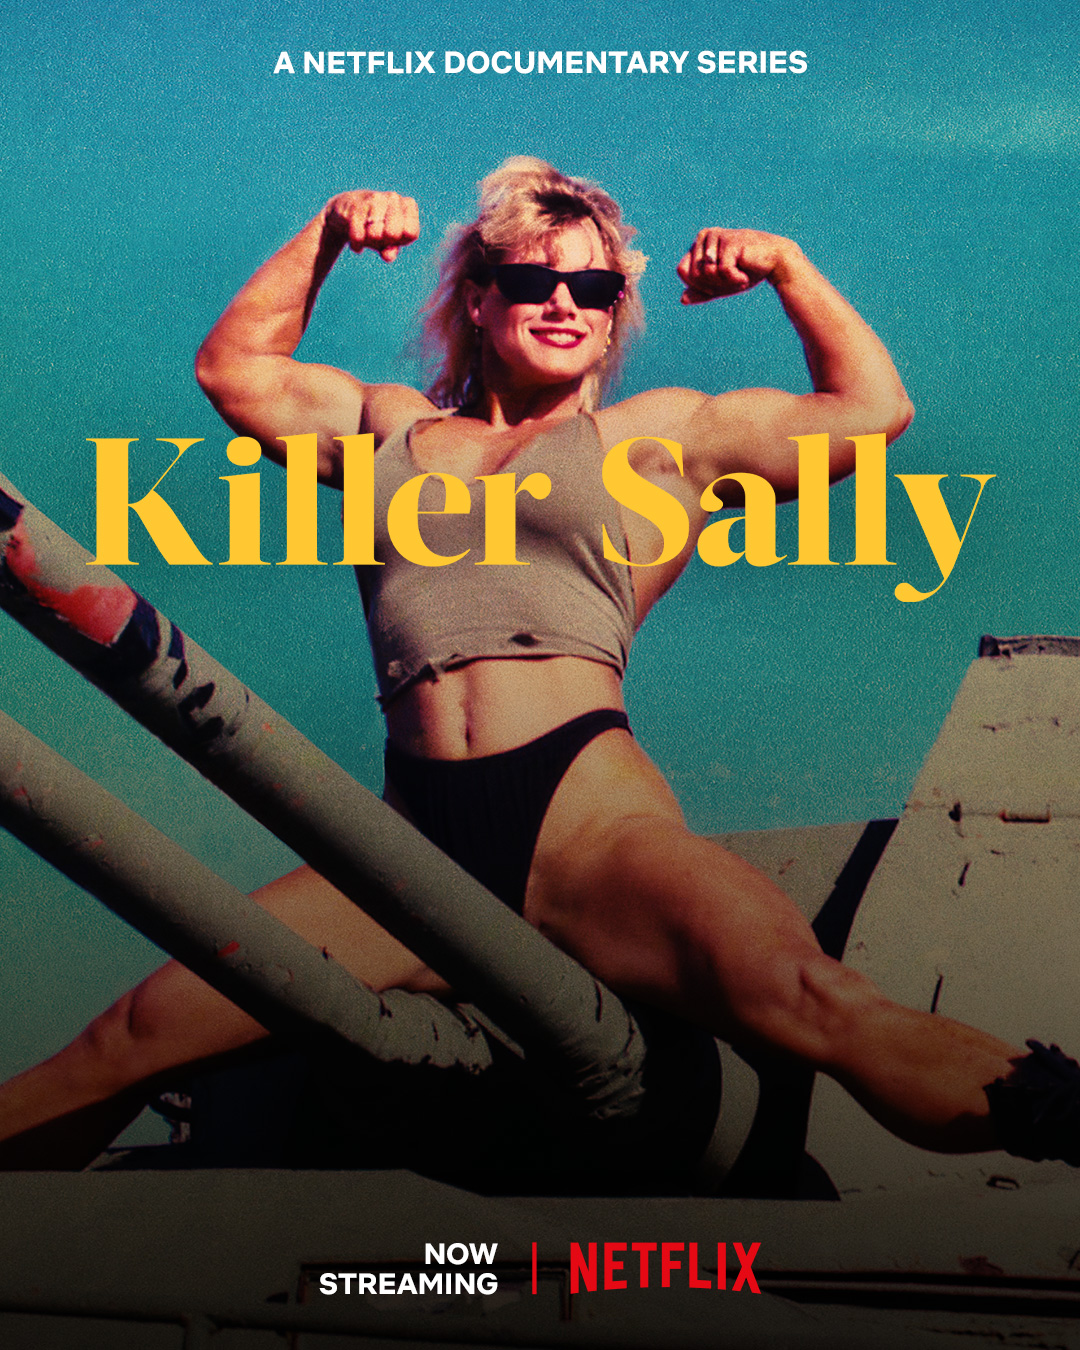 Killer Sally Episode 4 Release Date